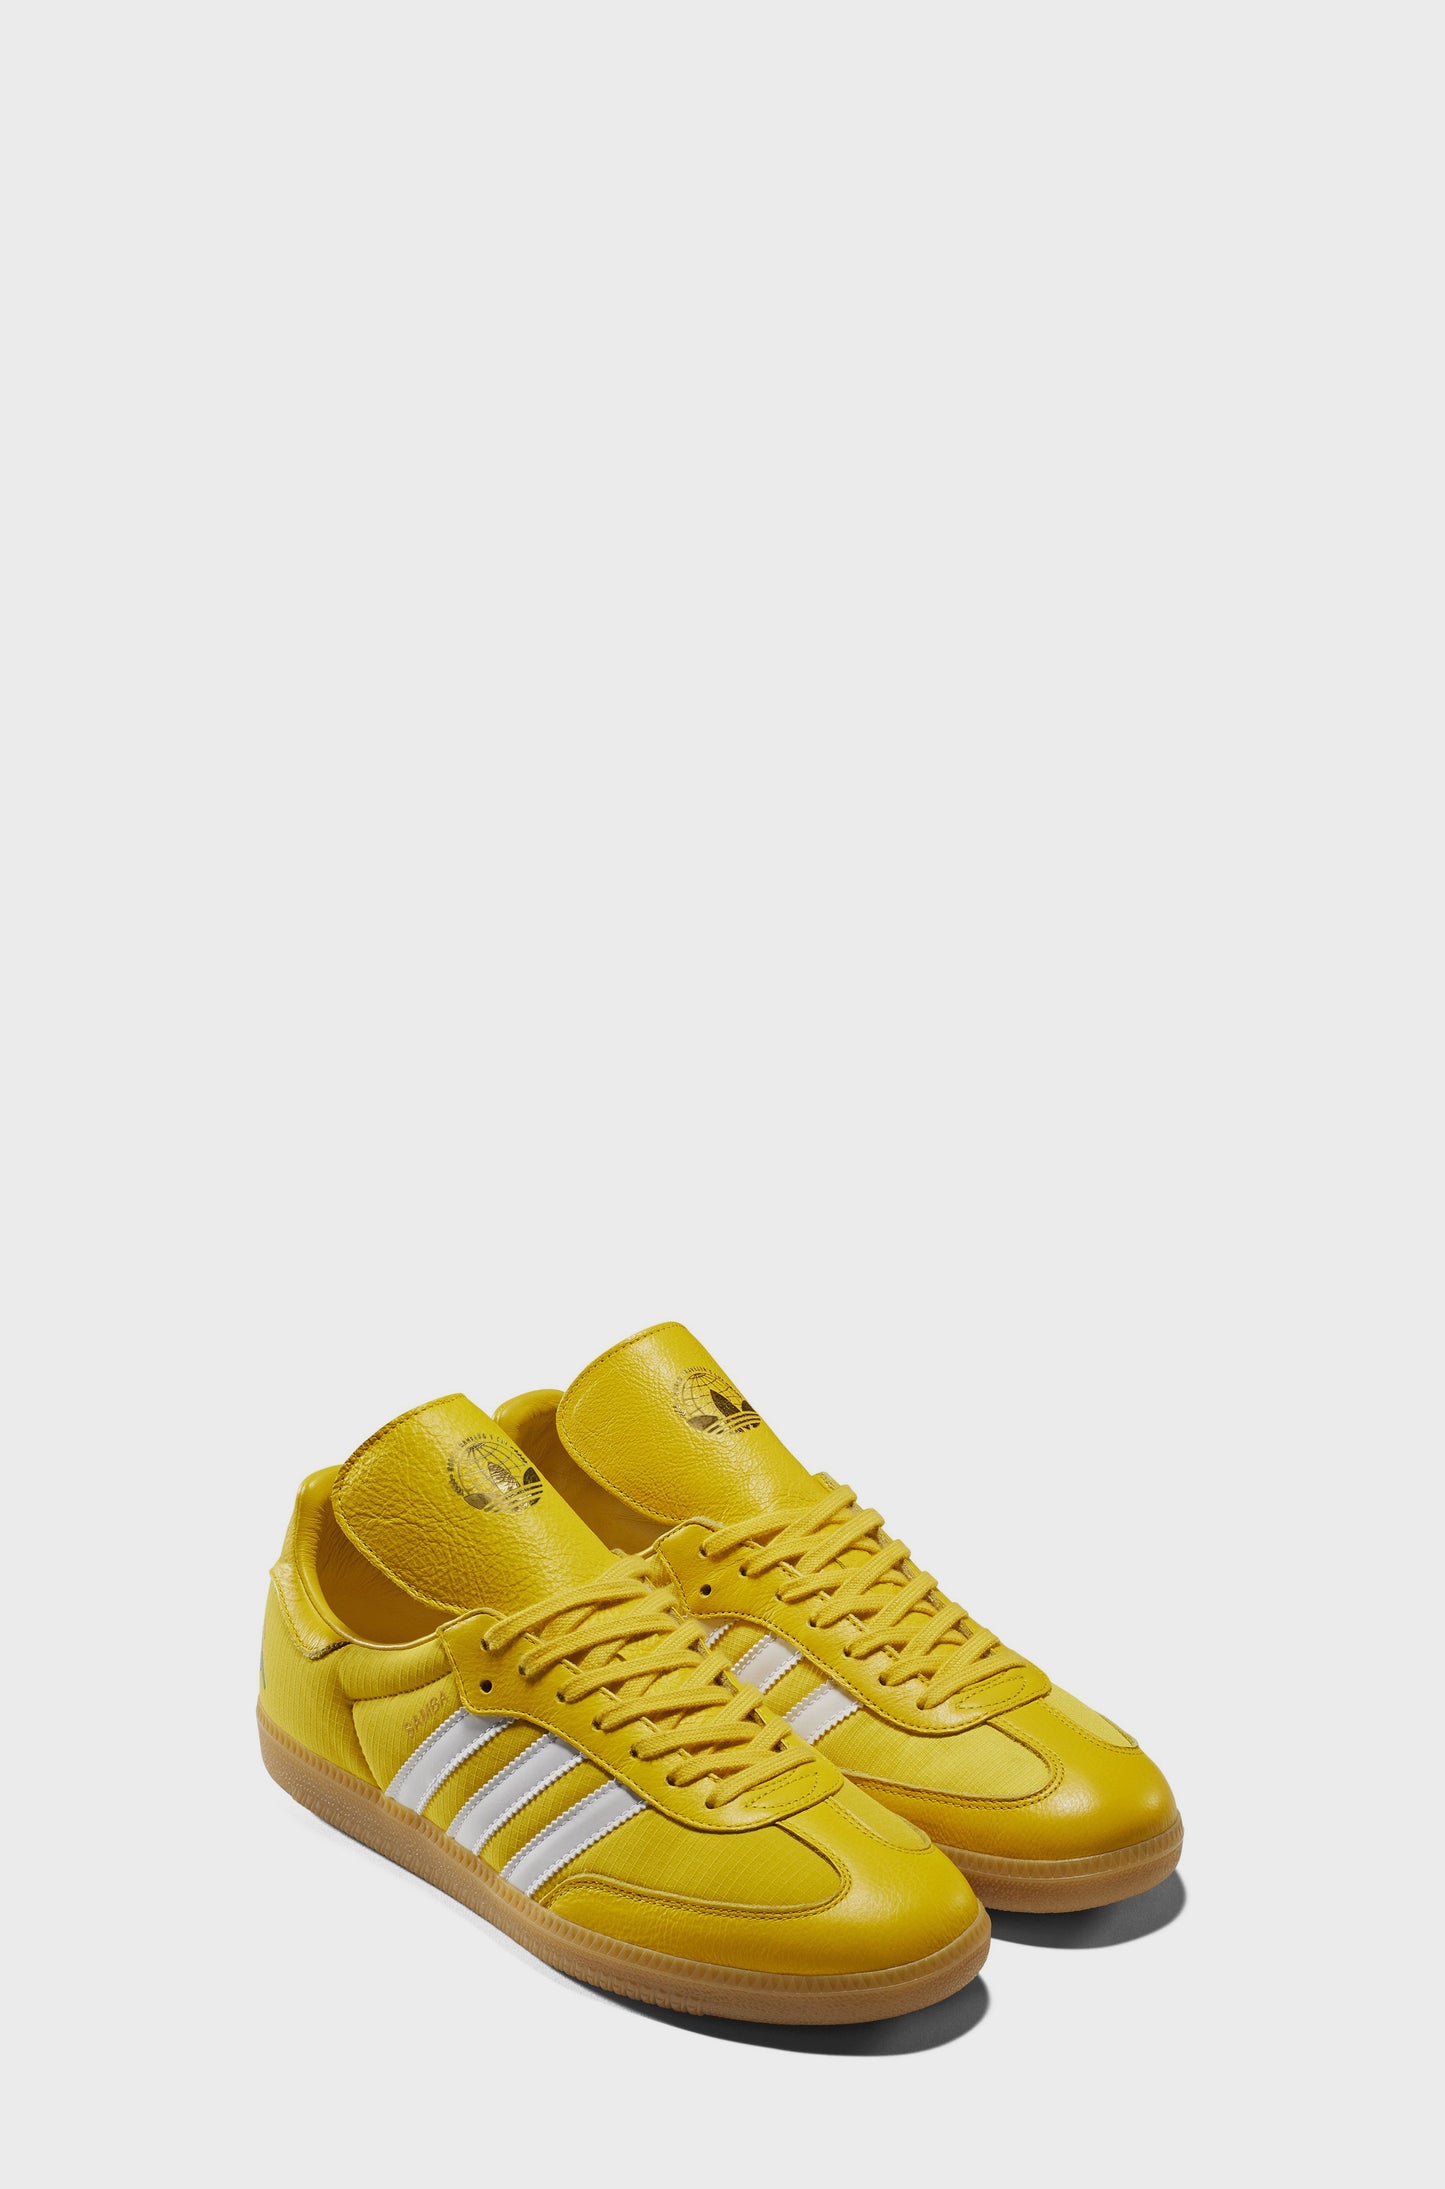 Adidas X Oyster Samba Og (Yellow)